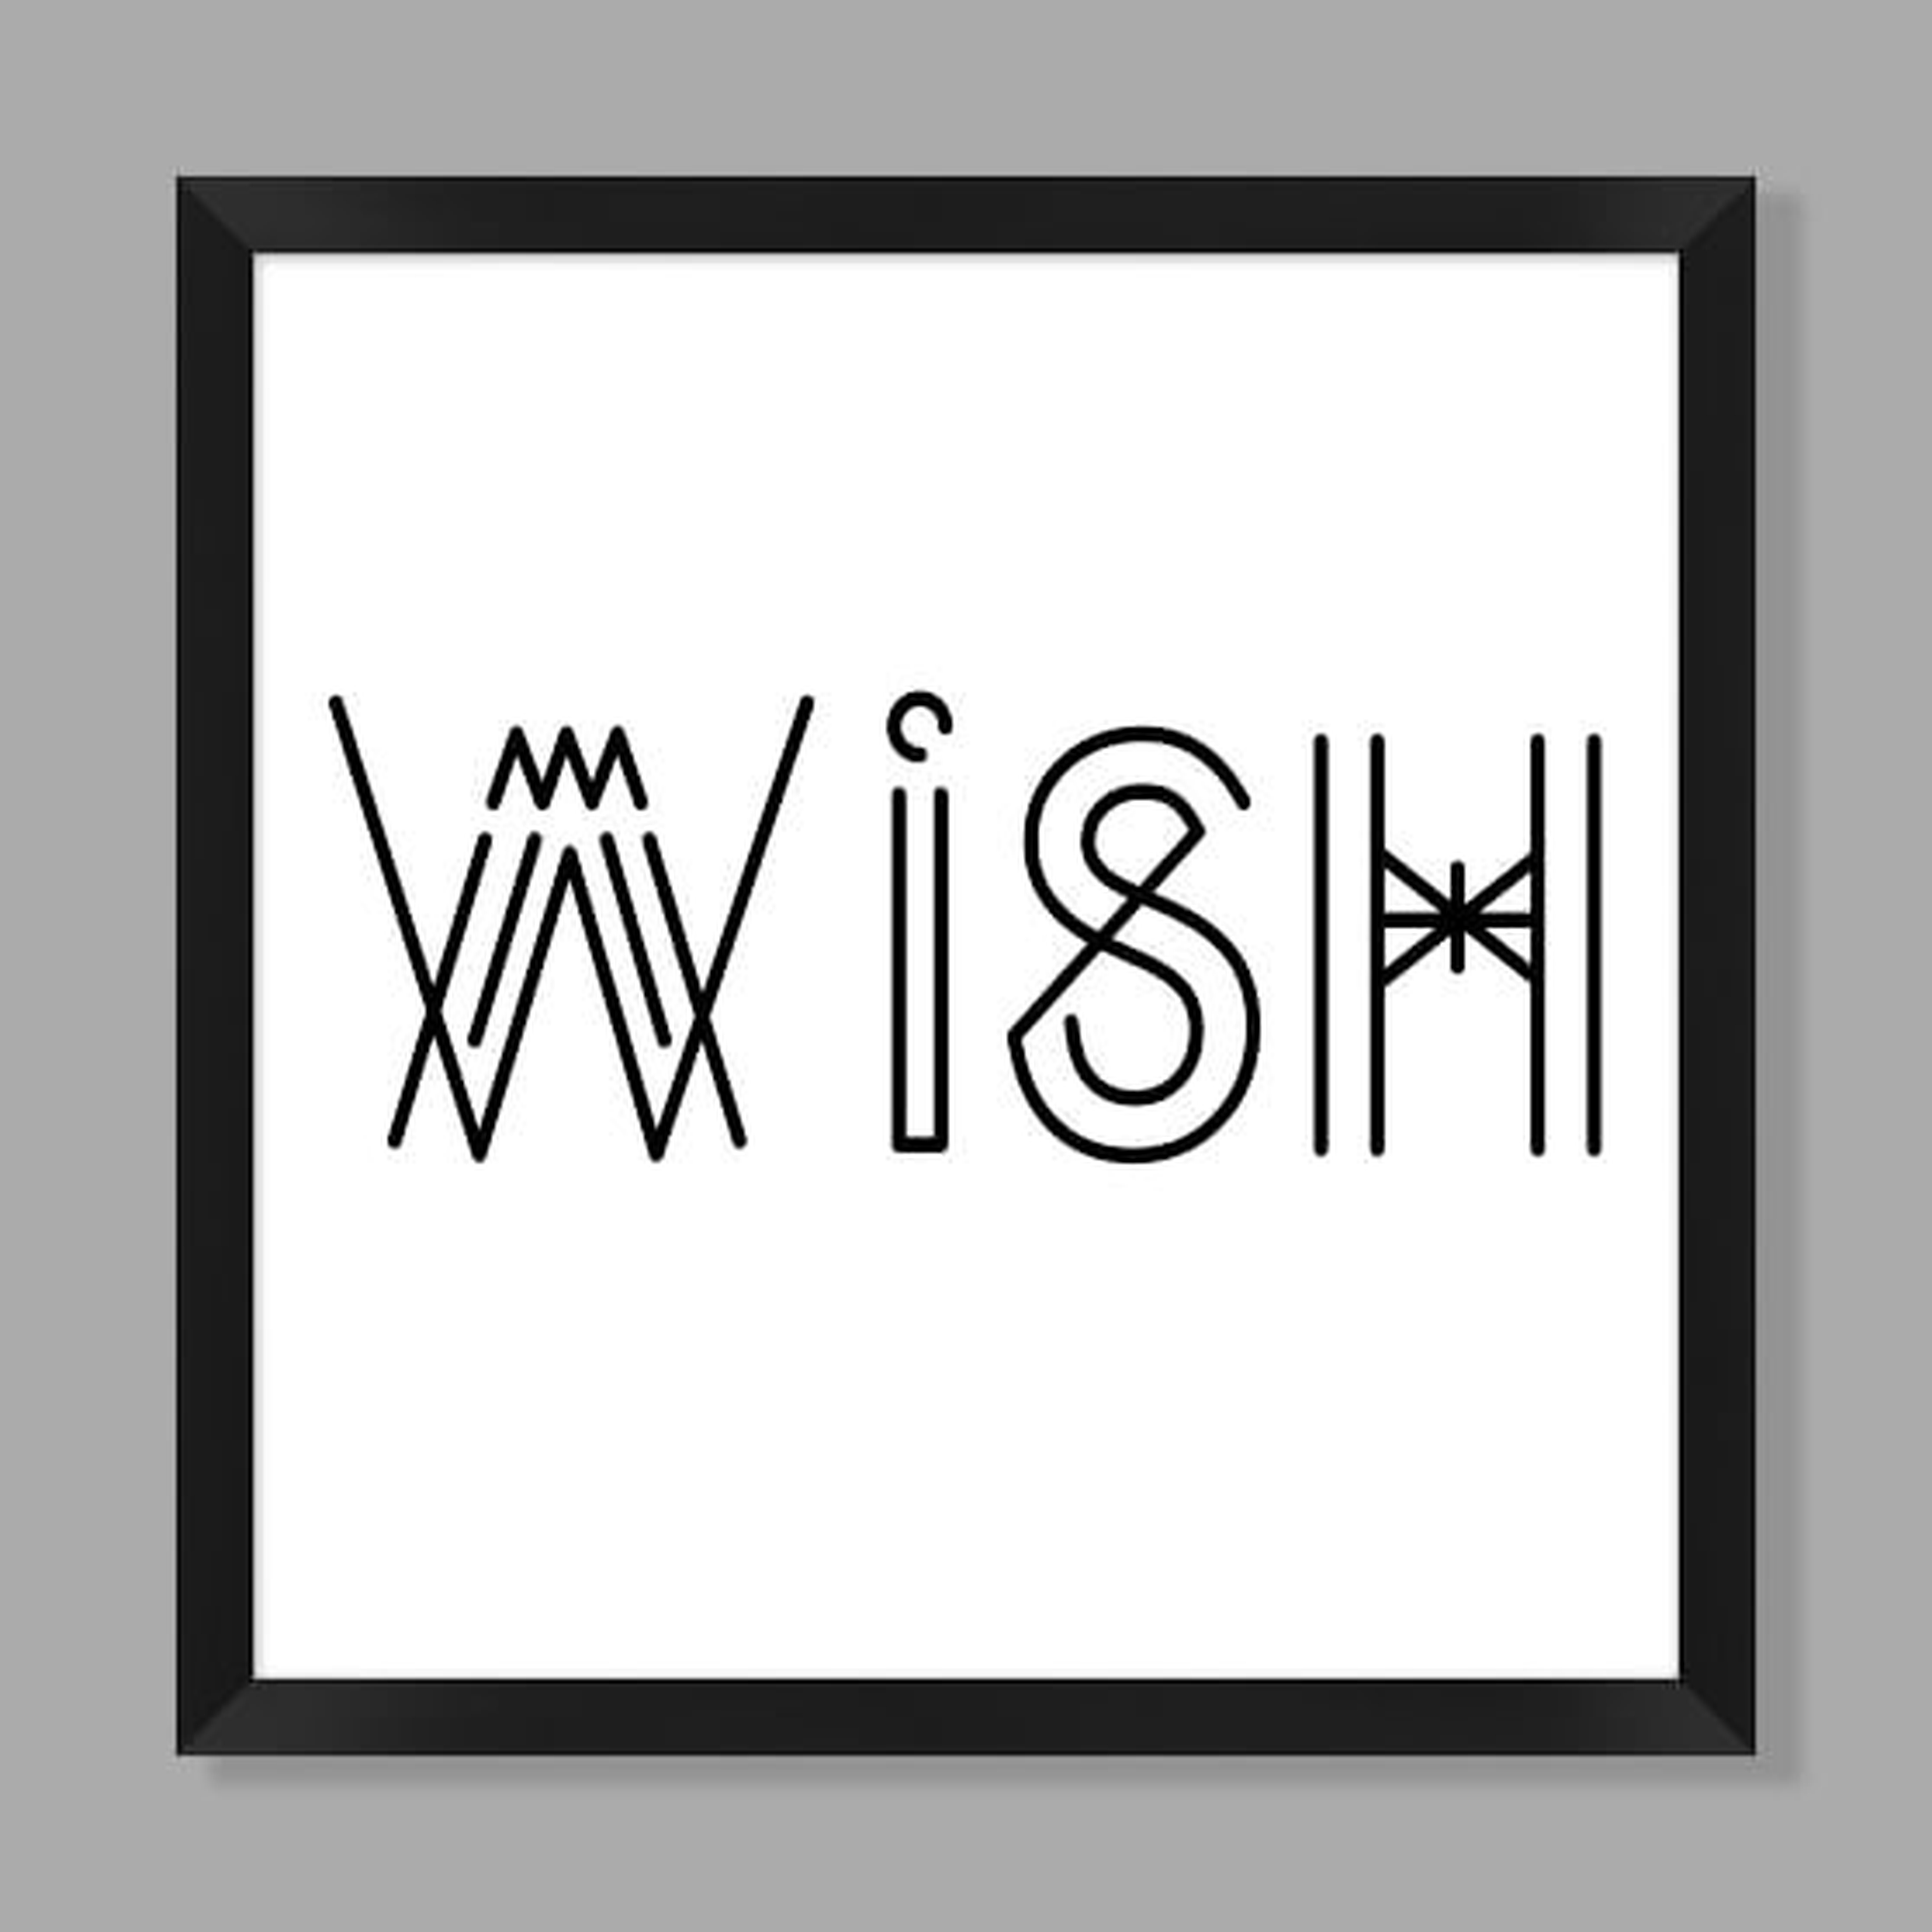 Wish Framed Art, 27.75"x27.75" - Pottery Barn Teen